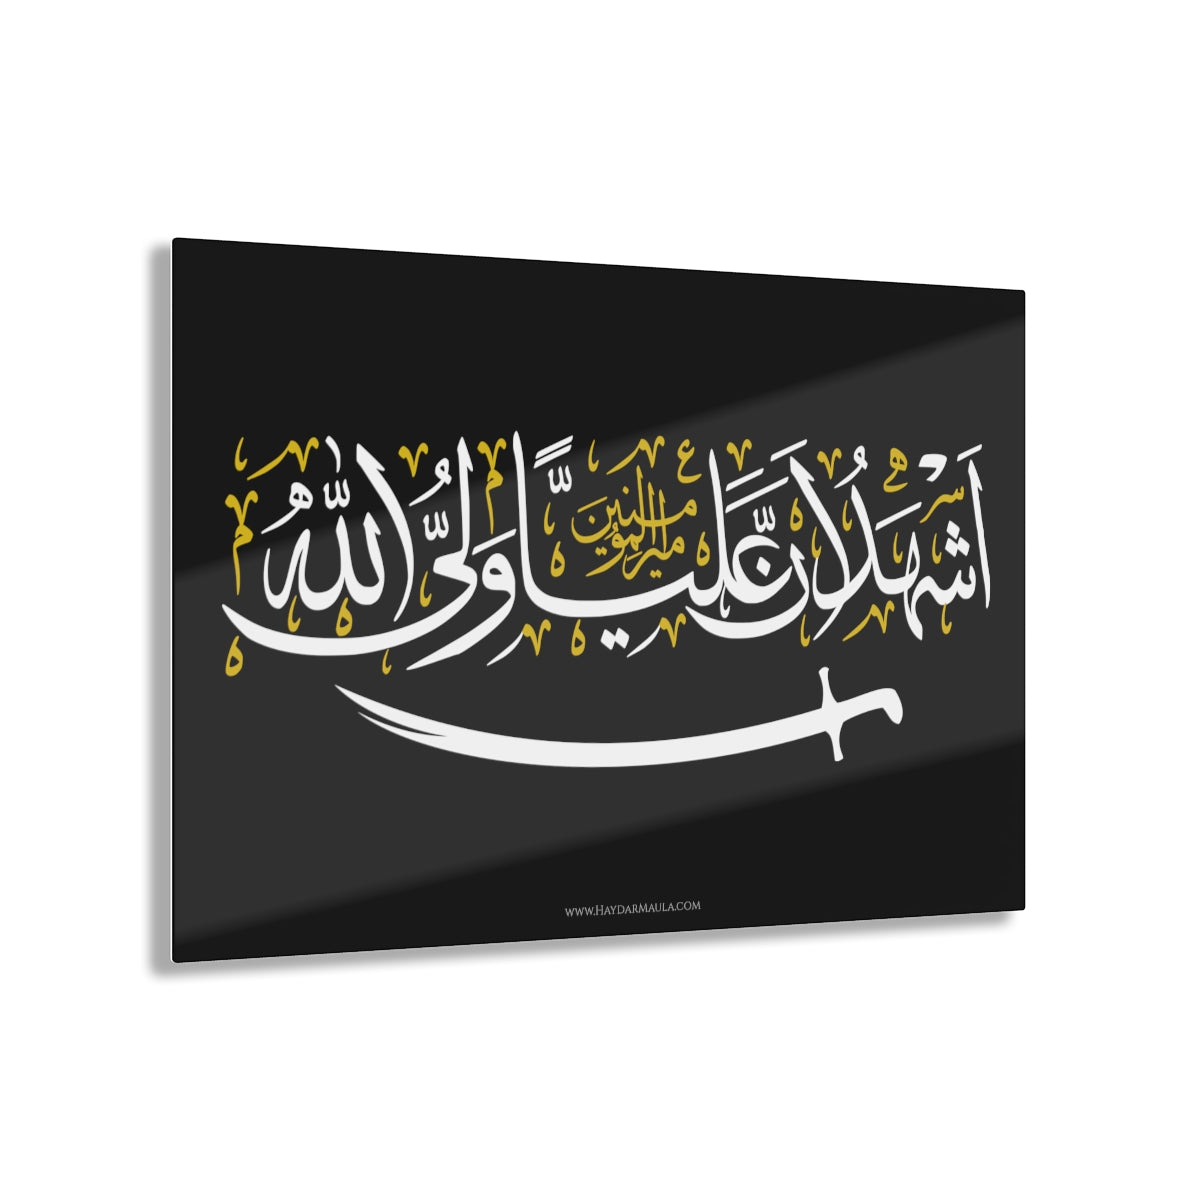 Ashhado 'Aliyyun (as) Waliyullah - Acrylic Print - Imam Ali (as), Muharram, Azadari, Ashura, Shia Islamic